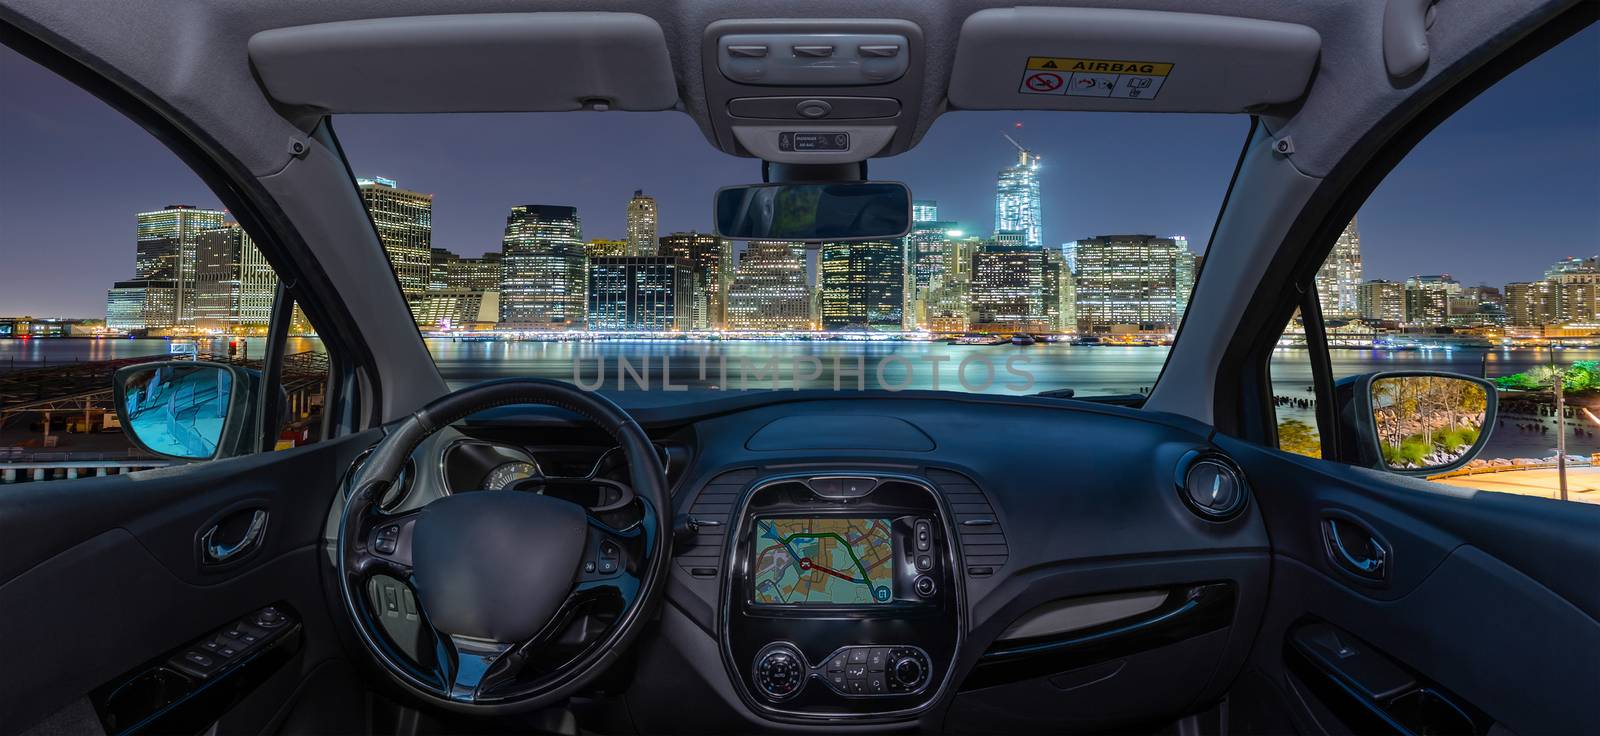 Car windshield with view of Manhattan skyline, New York, USA by marcorubino